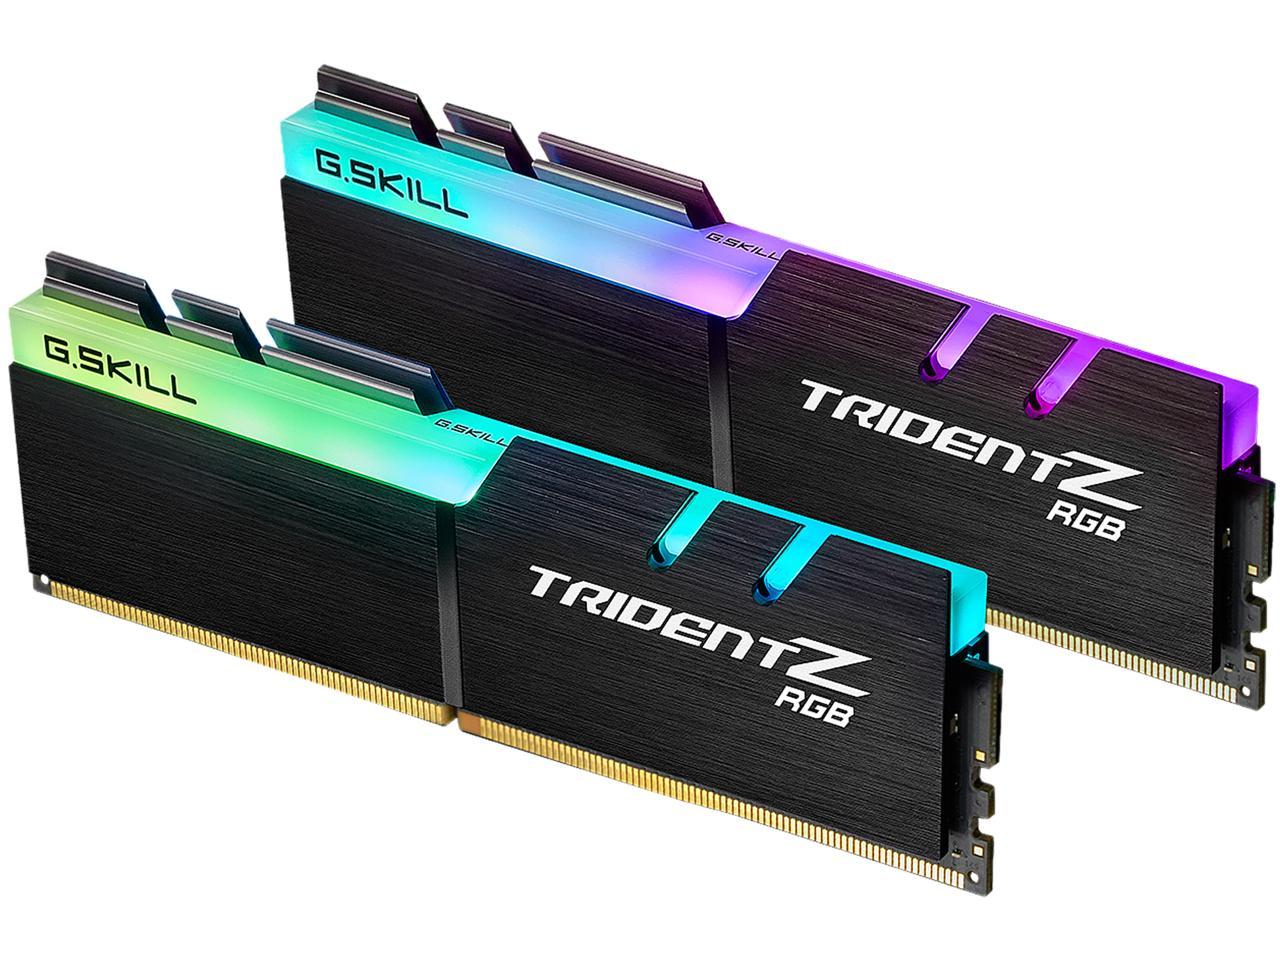 32GB (2x 16) G.SKILL TridentZ Neo RGB DDR4 3600 Desktop RAM Kit @ Newegg $130